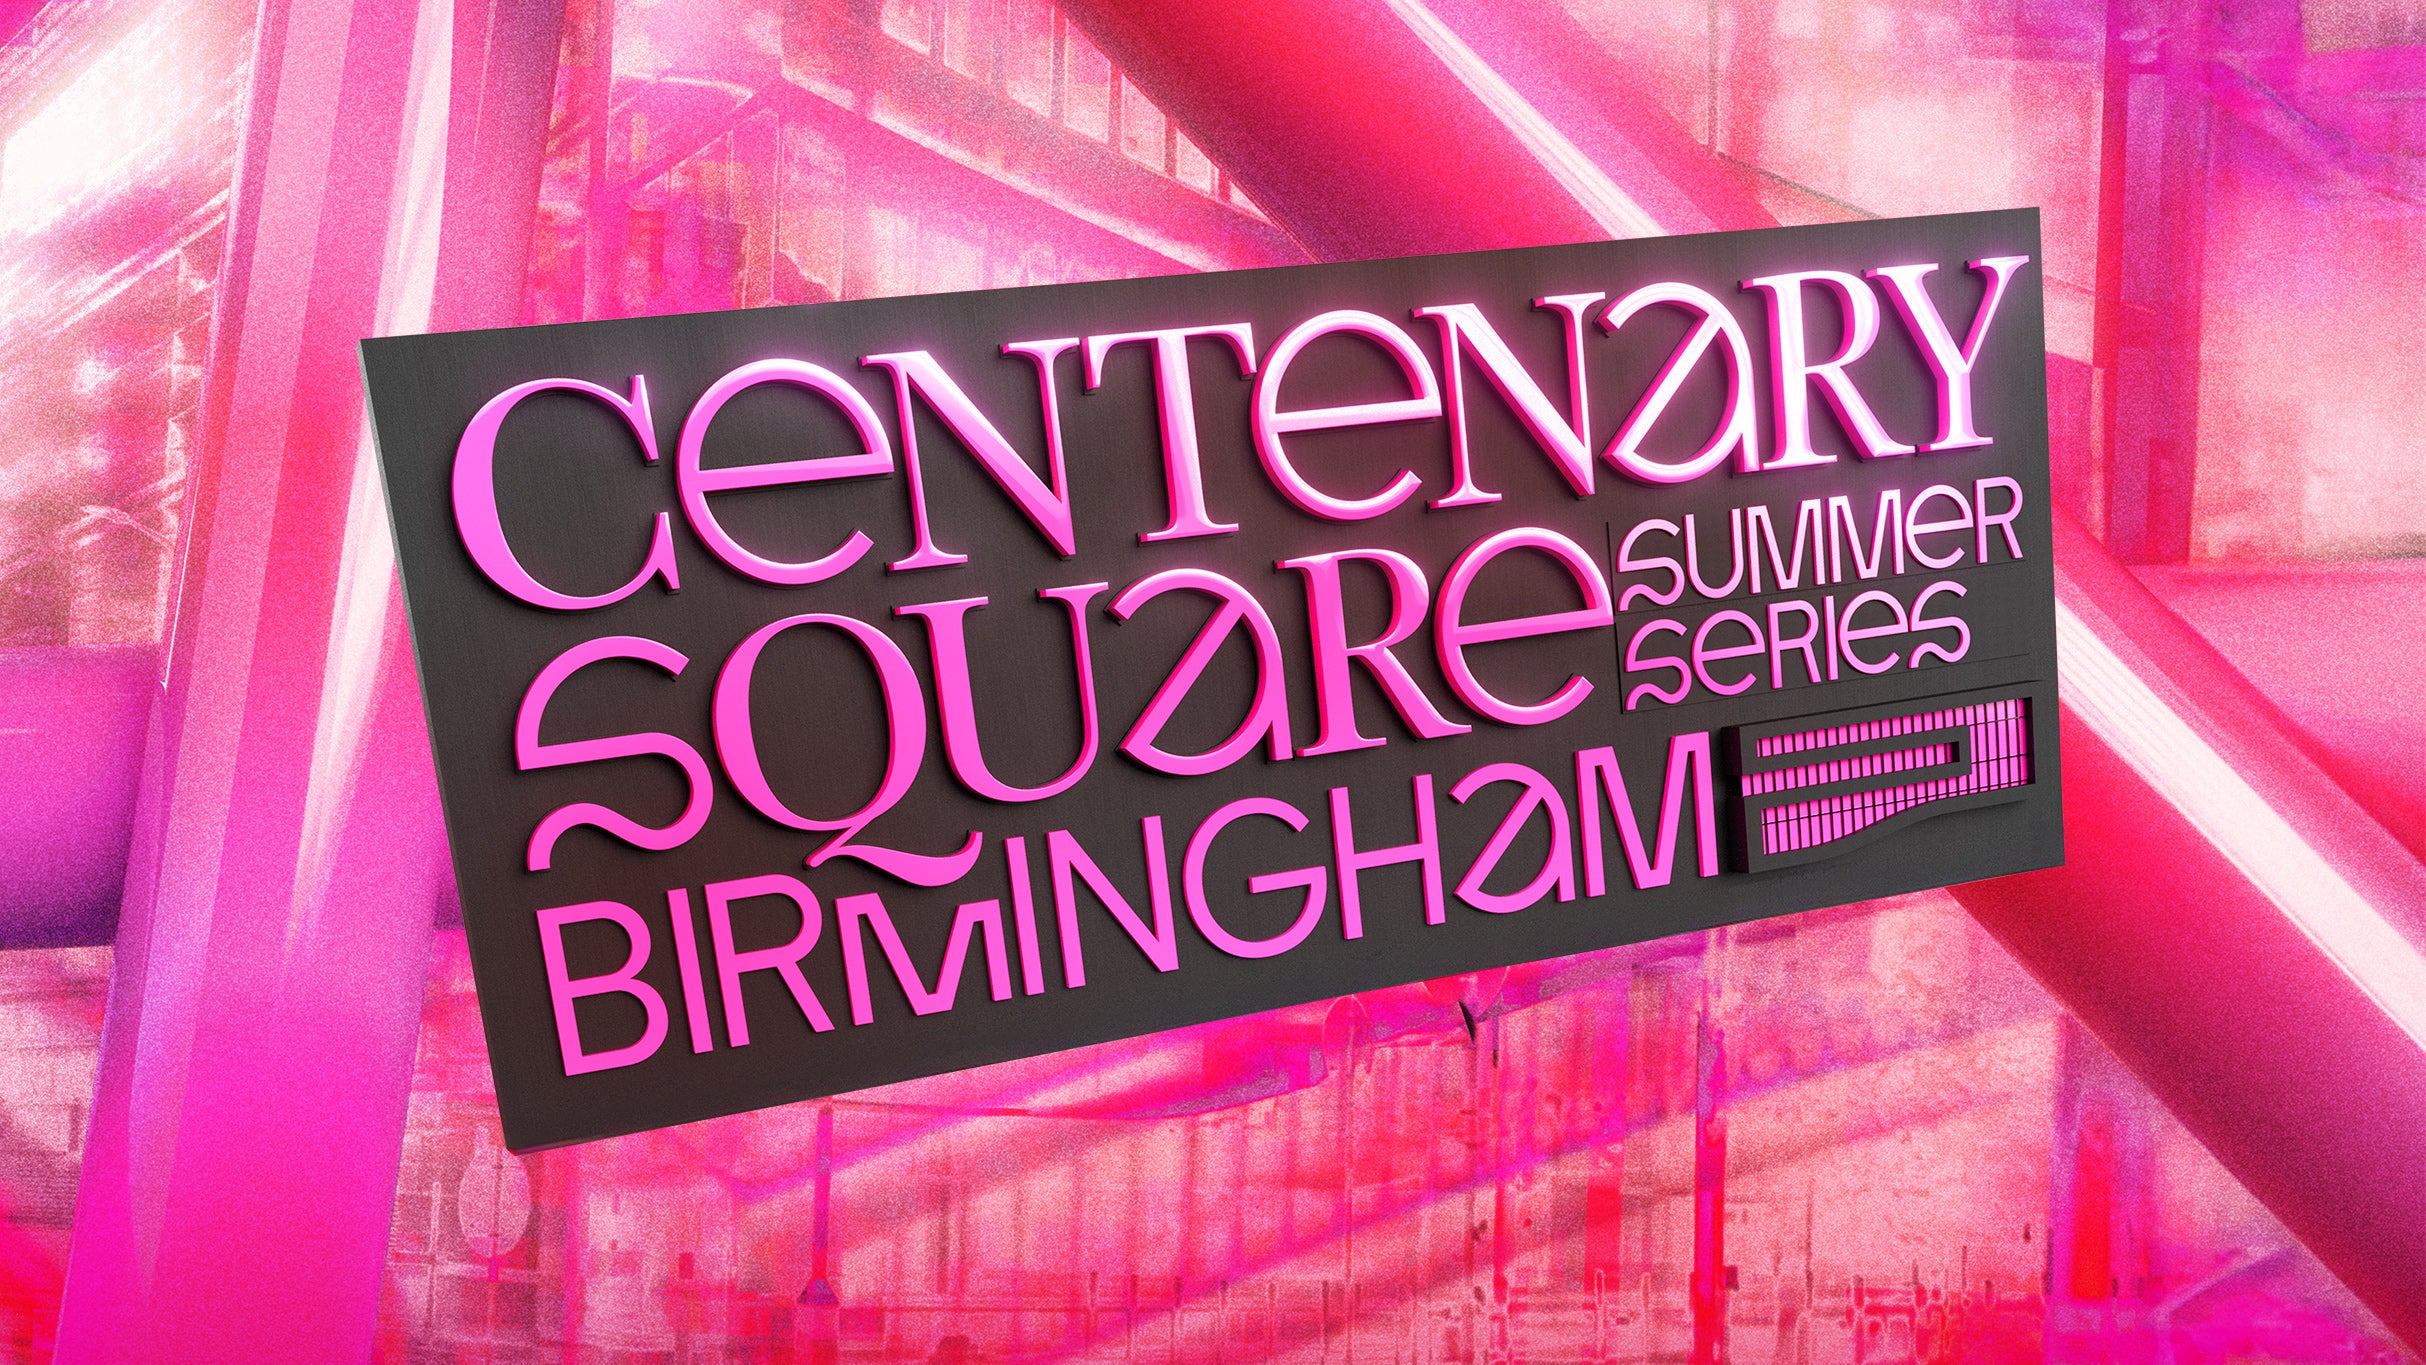 new presale passcode to Centenary Square Summer Series: Weekend Ticket tickets in Birmingham